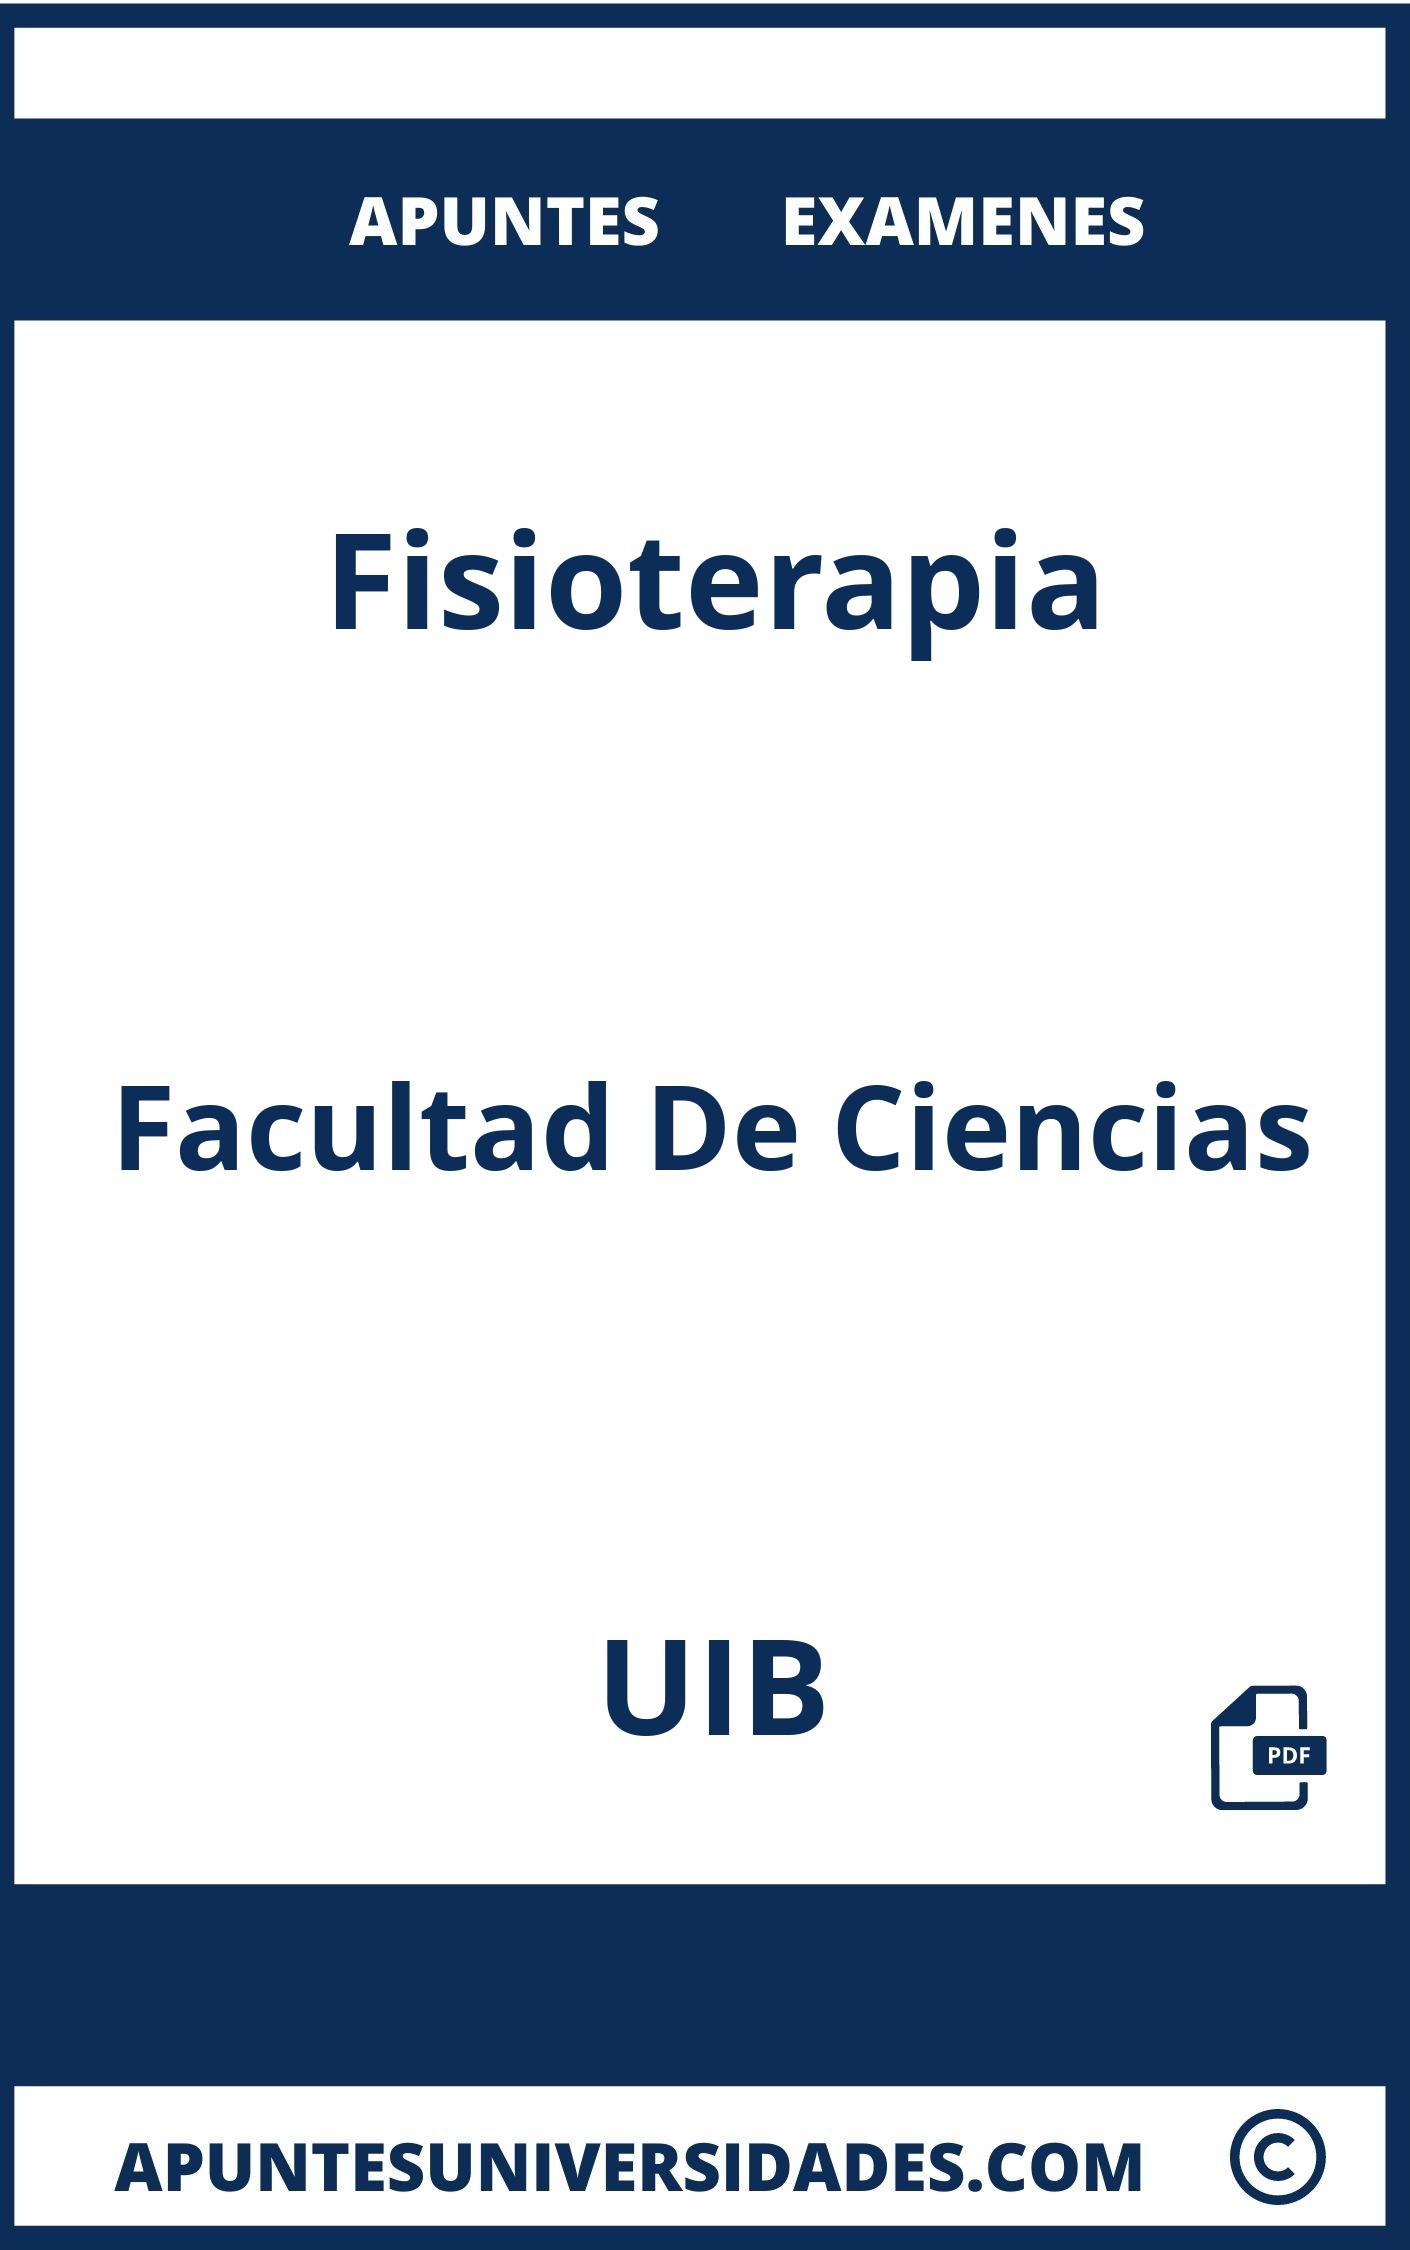 Fisioterapia UIB Examenes Apuntes